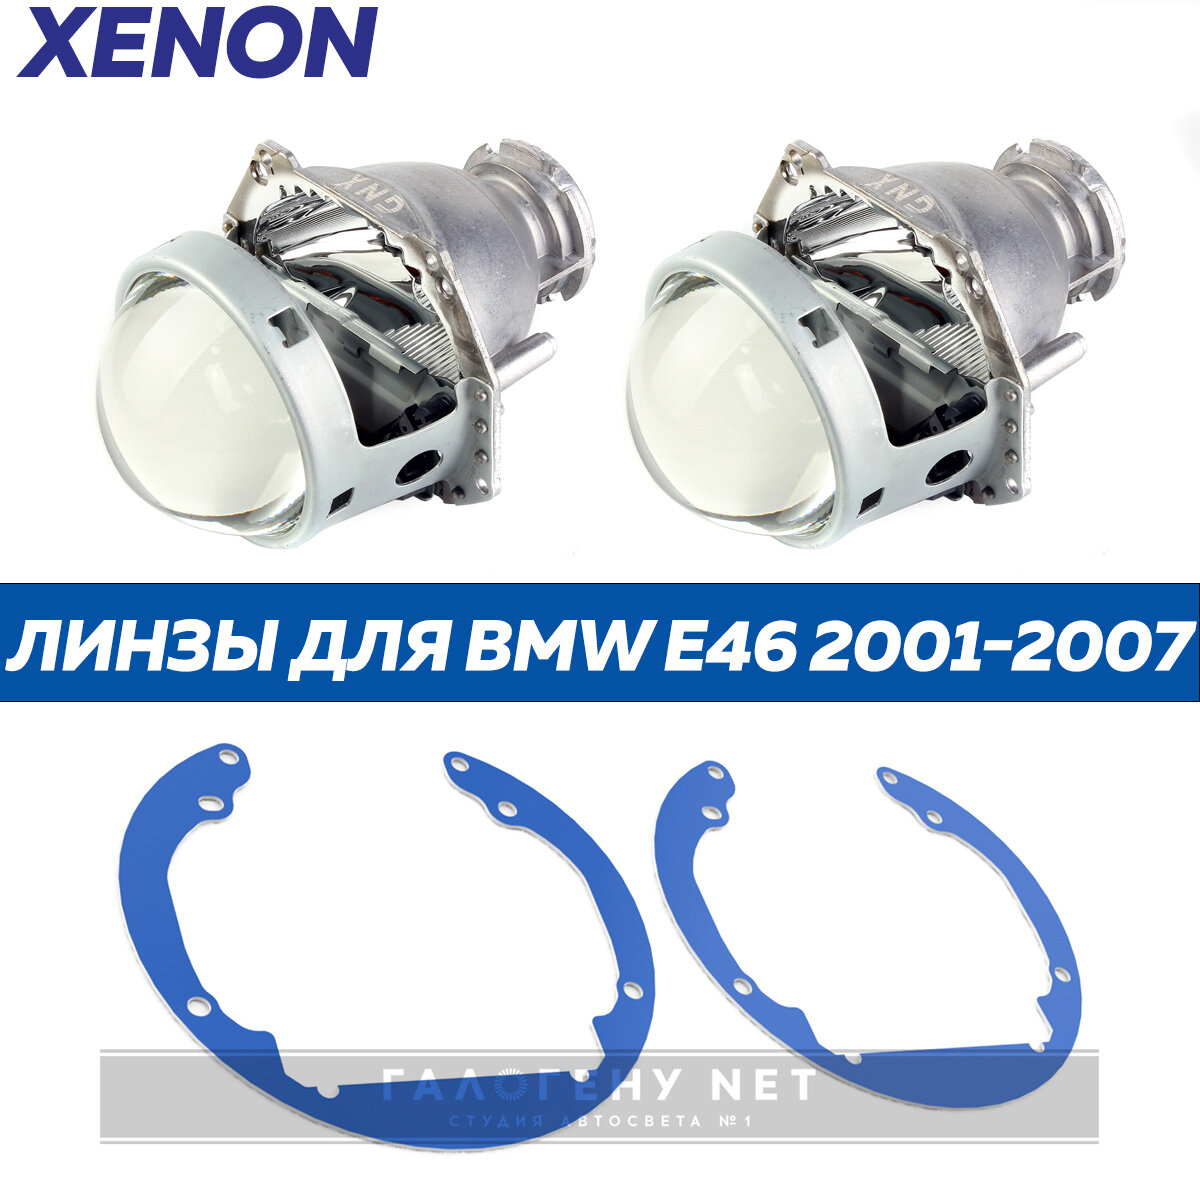 Линзы ксенон GNX для фар BMW 3er E46 sedan 2001-2007 ZKW (CLEAR) комплект лампа 2 шт для автомобилей БМВ